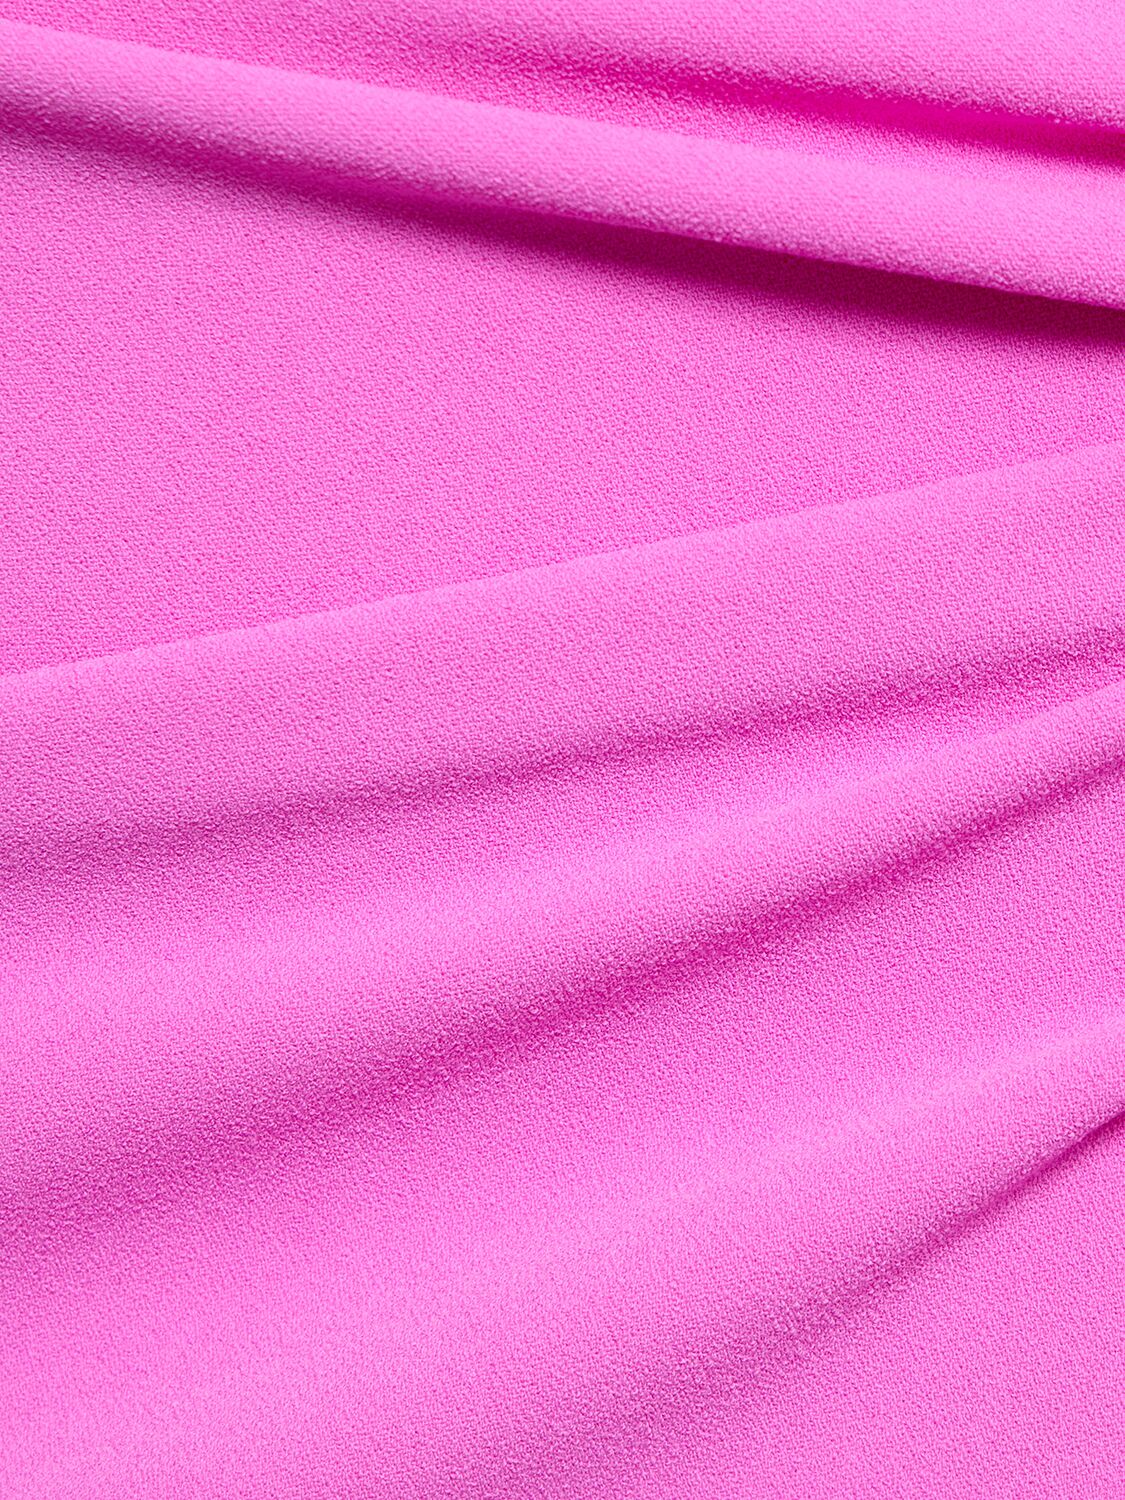 Shop Solace London Amalie Off-the-shoulder Crepe Long Dress In Pink